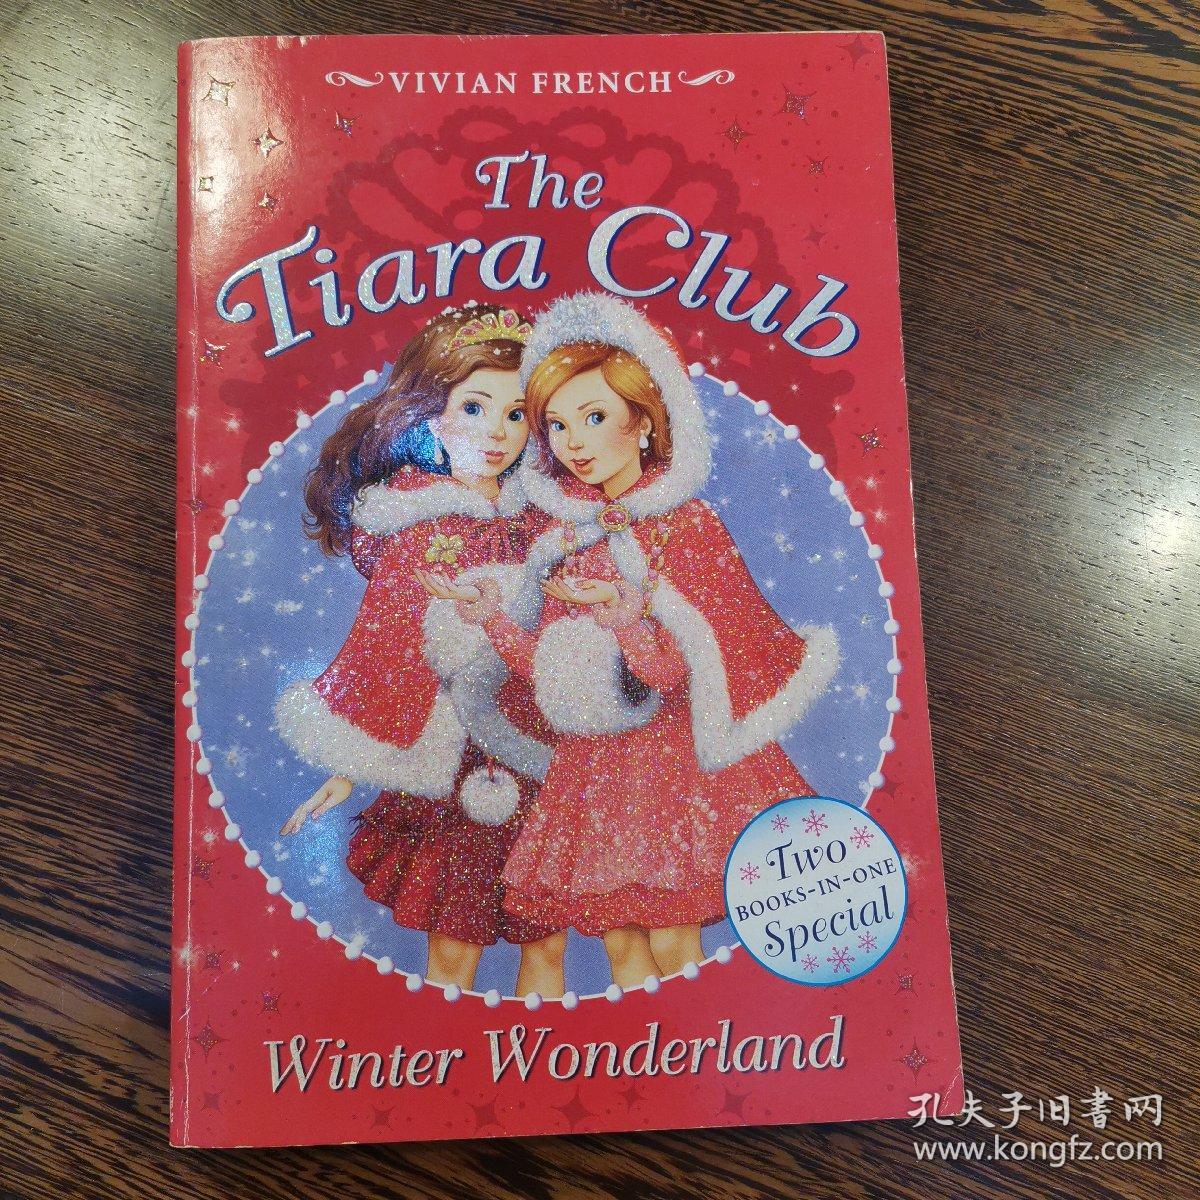 The Tiara Club Winter Wonderland